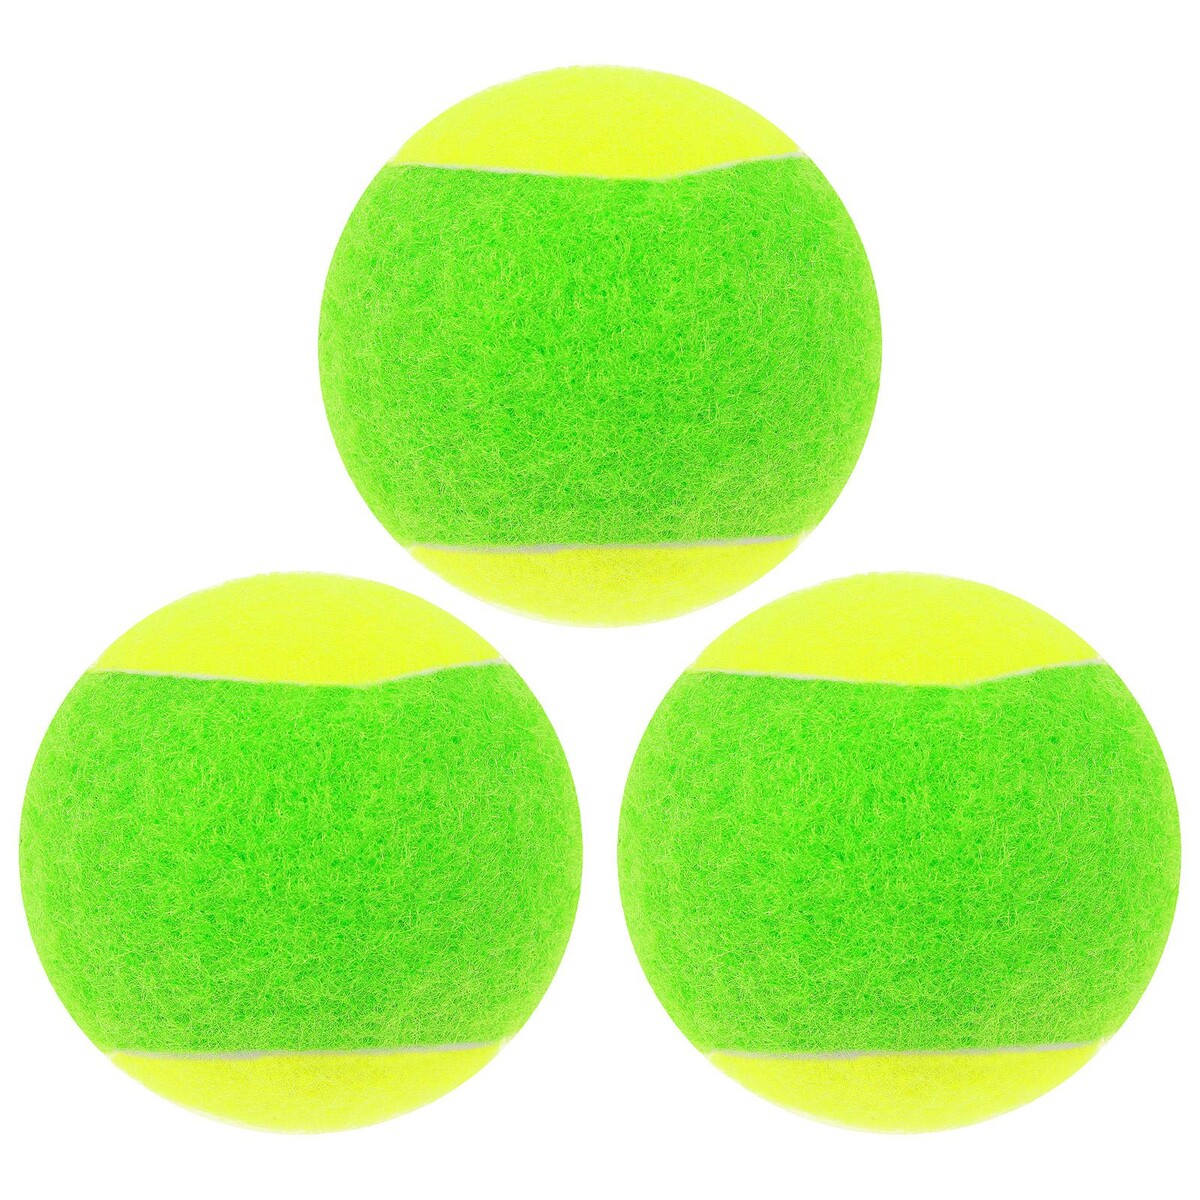 Набор мячей для большого тенниса onlytop swidon, 3 шт. ракетка для большого тенниса head ti tornado gr4 232239 мультиколор